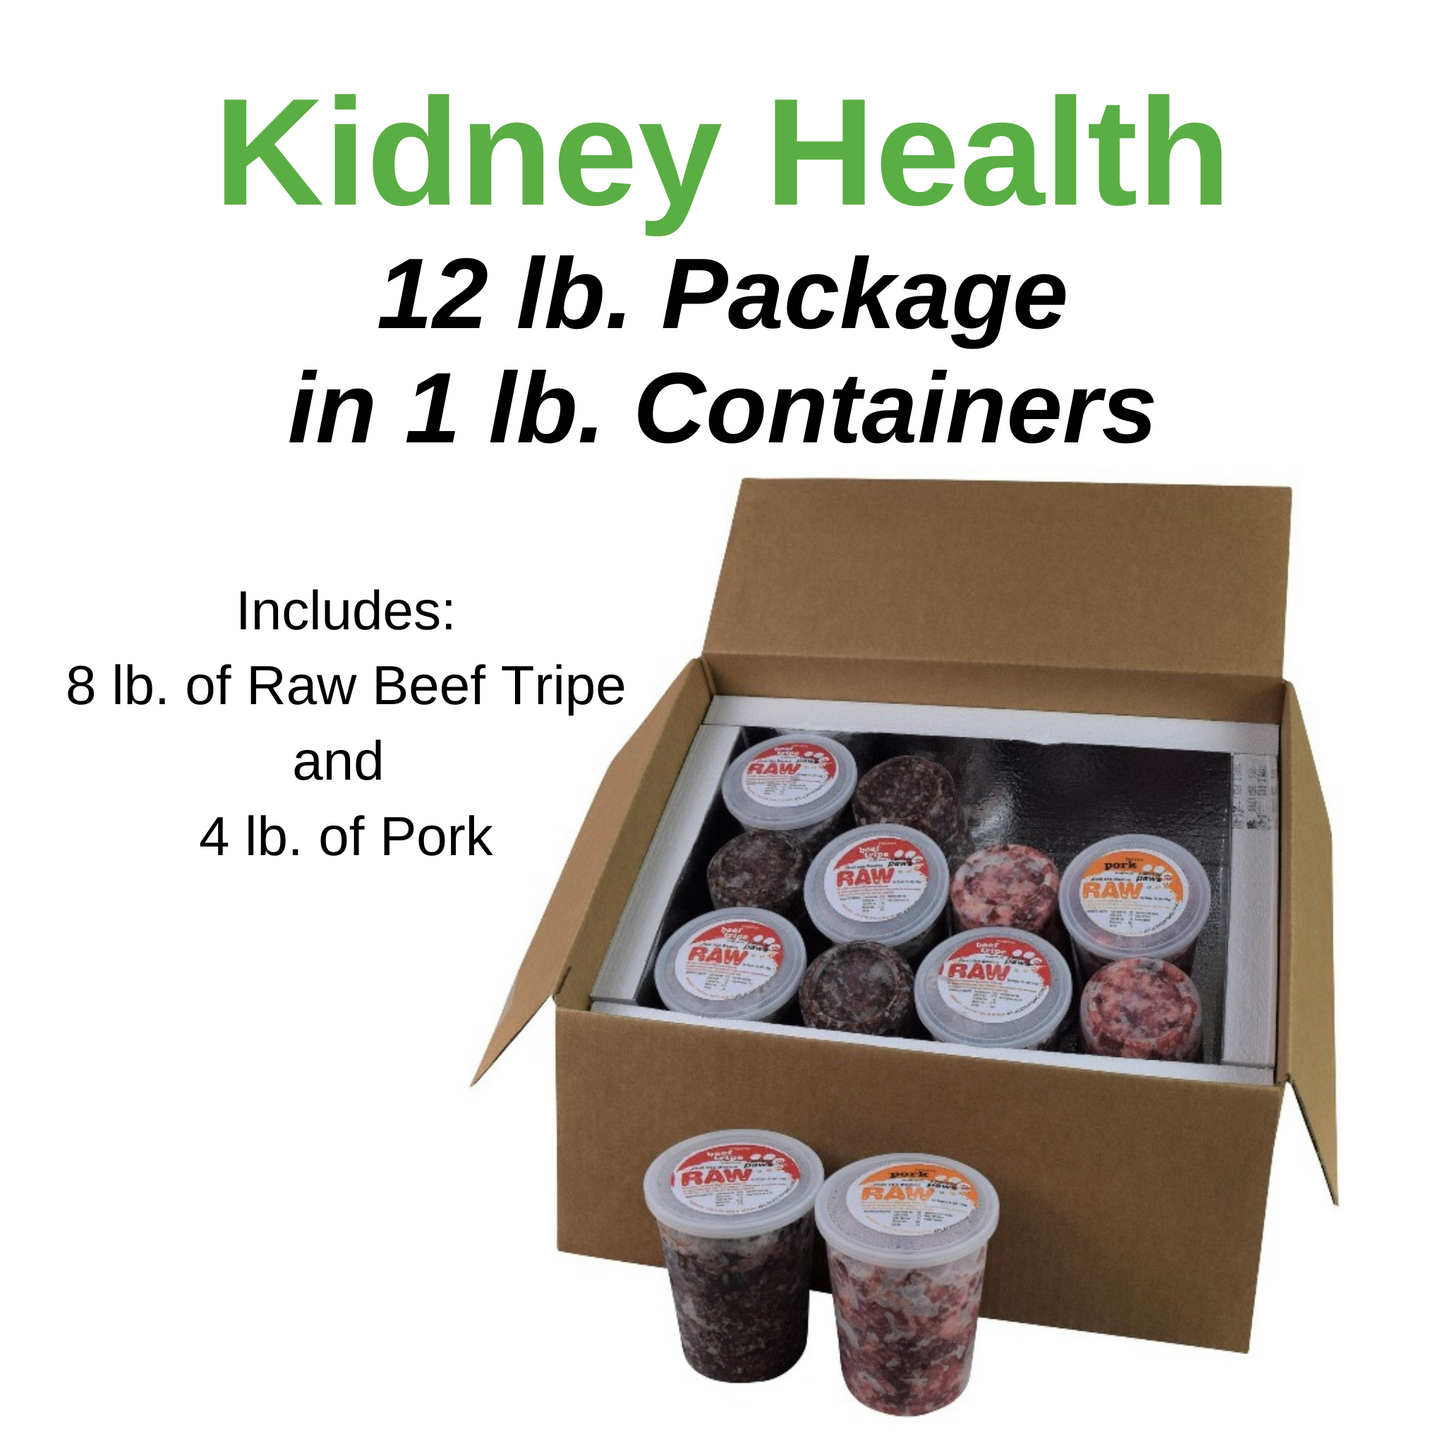 Kidney Health Package 12 lb.